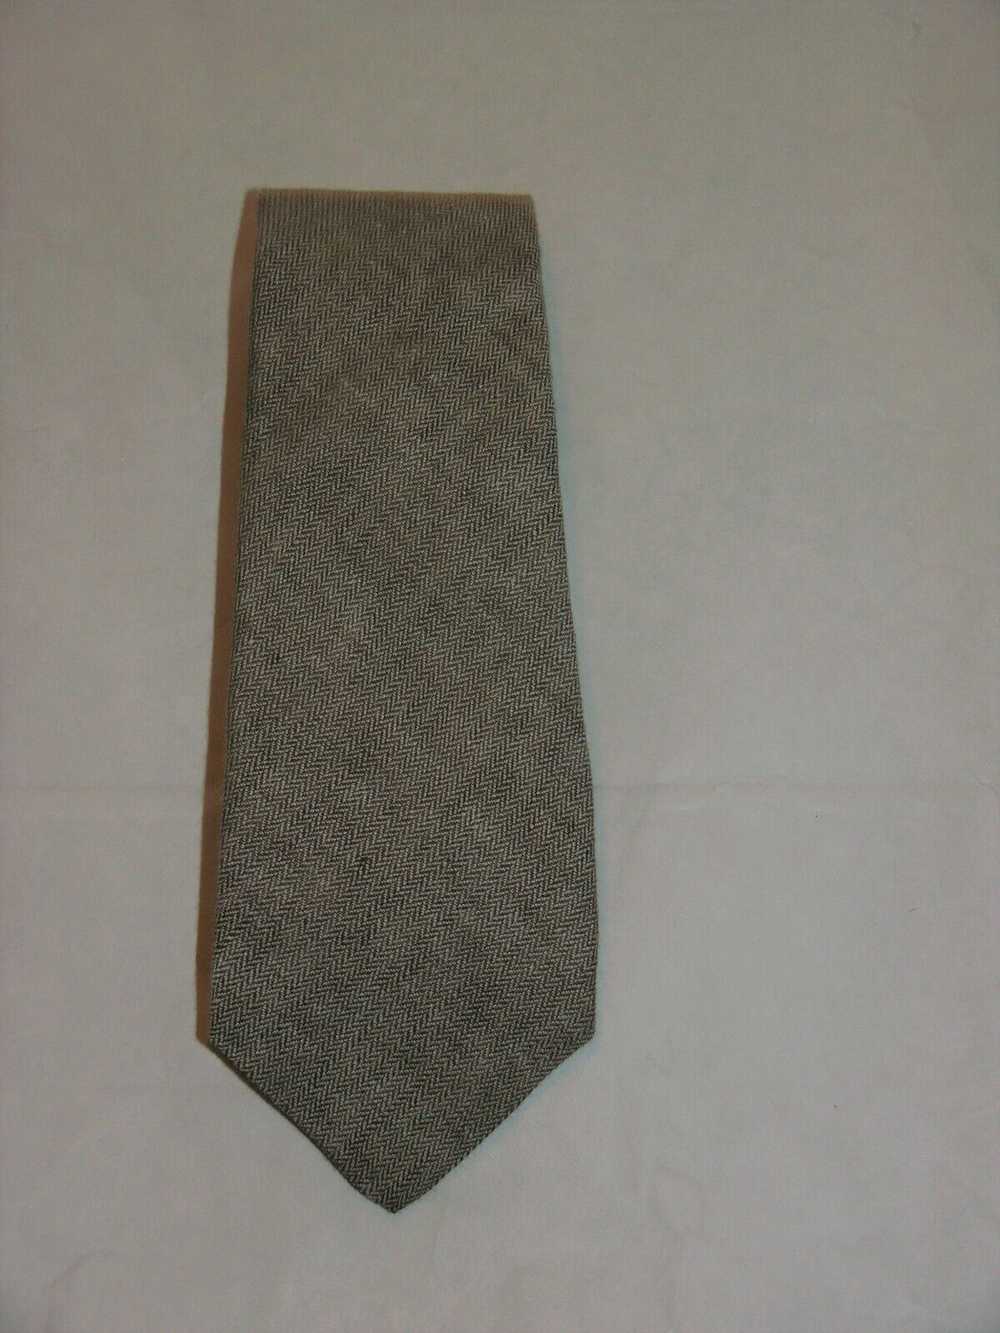 Kiton Herringbone Classic Width 100% Linen Tie - image 1